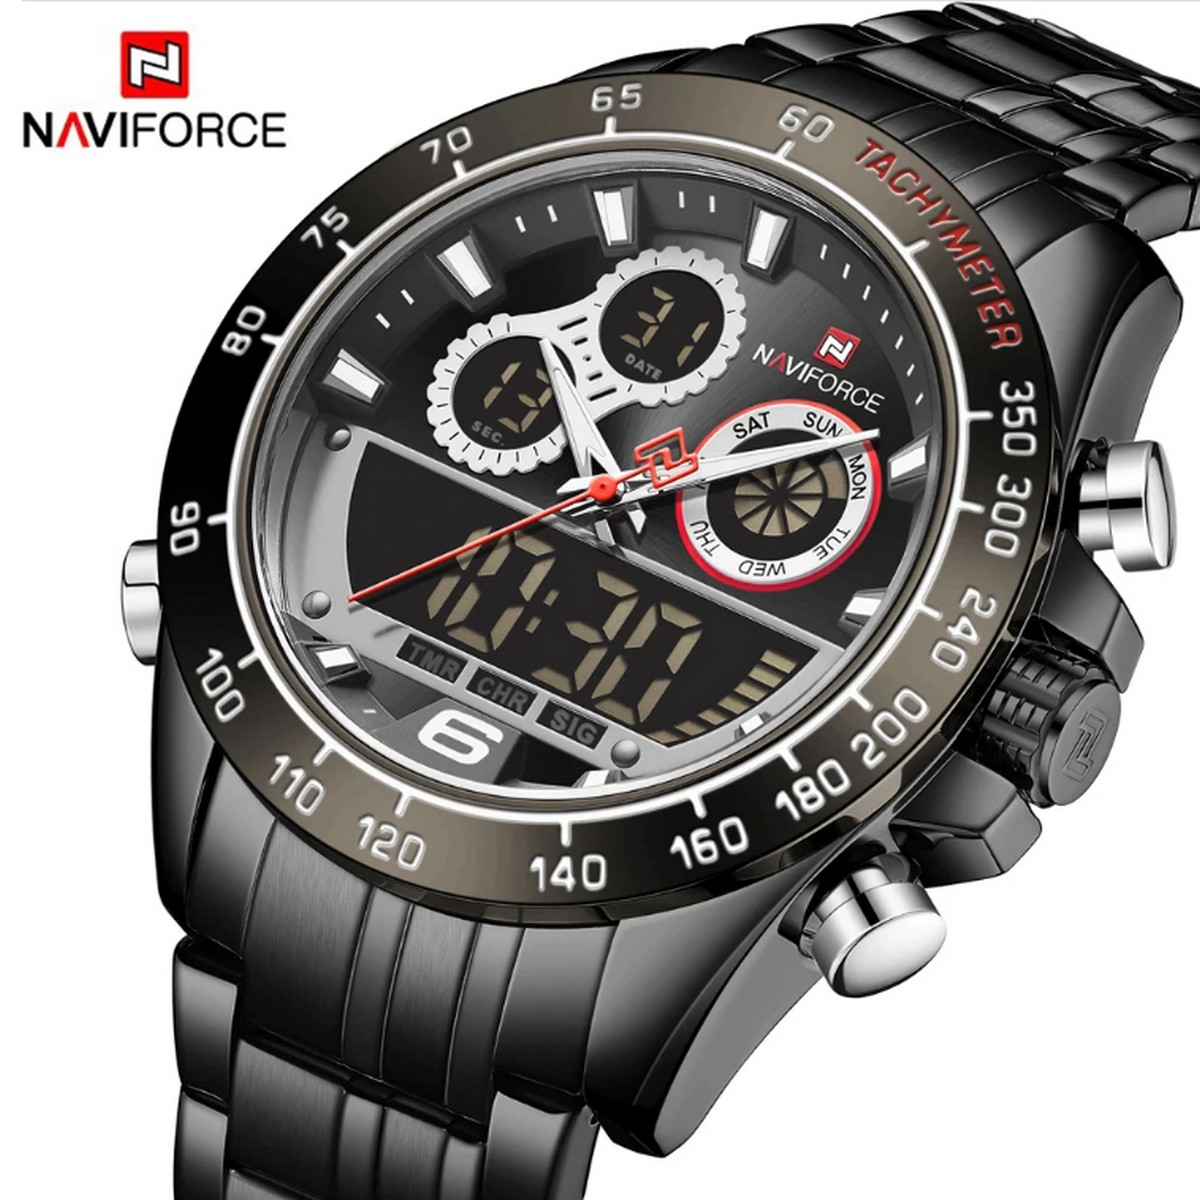 NaviForce - NF9188-S - Stainless Steel Men's Watch